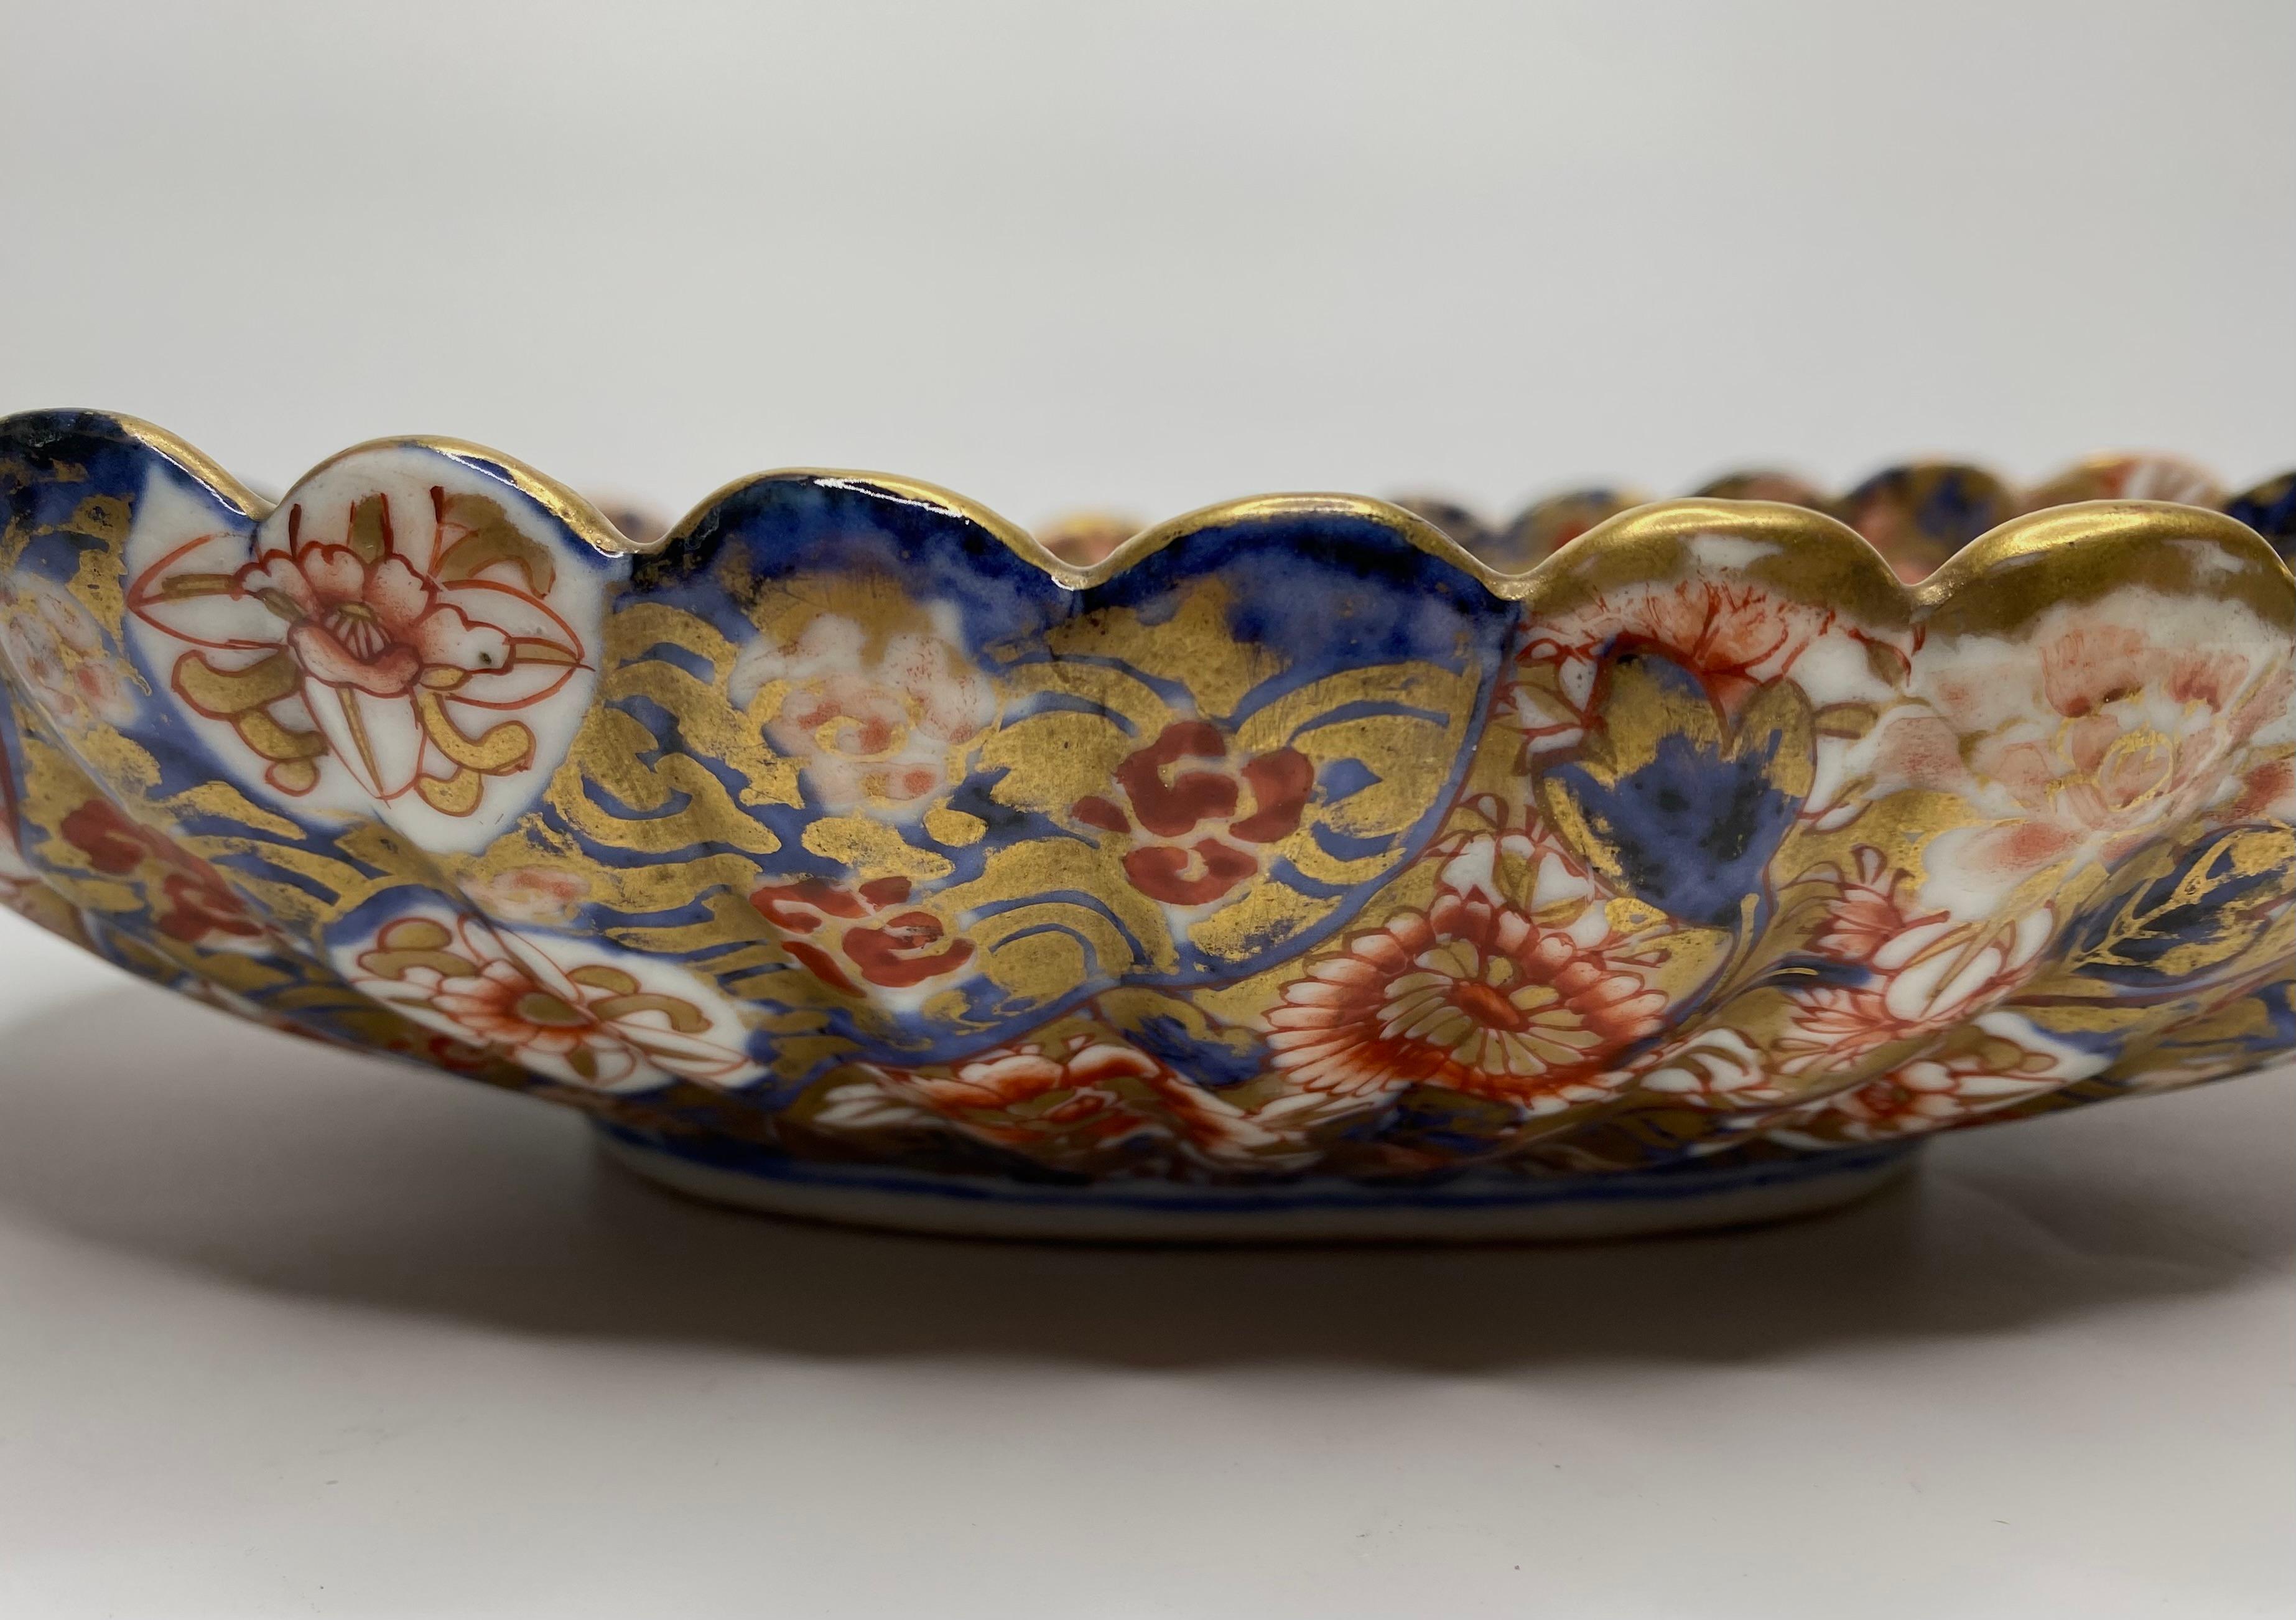 Porcelain Imari porcelain shallow bowl, Arita, Japan, c. 1890, Meiji Period.